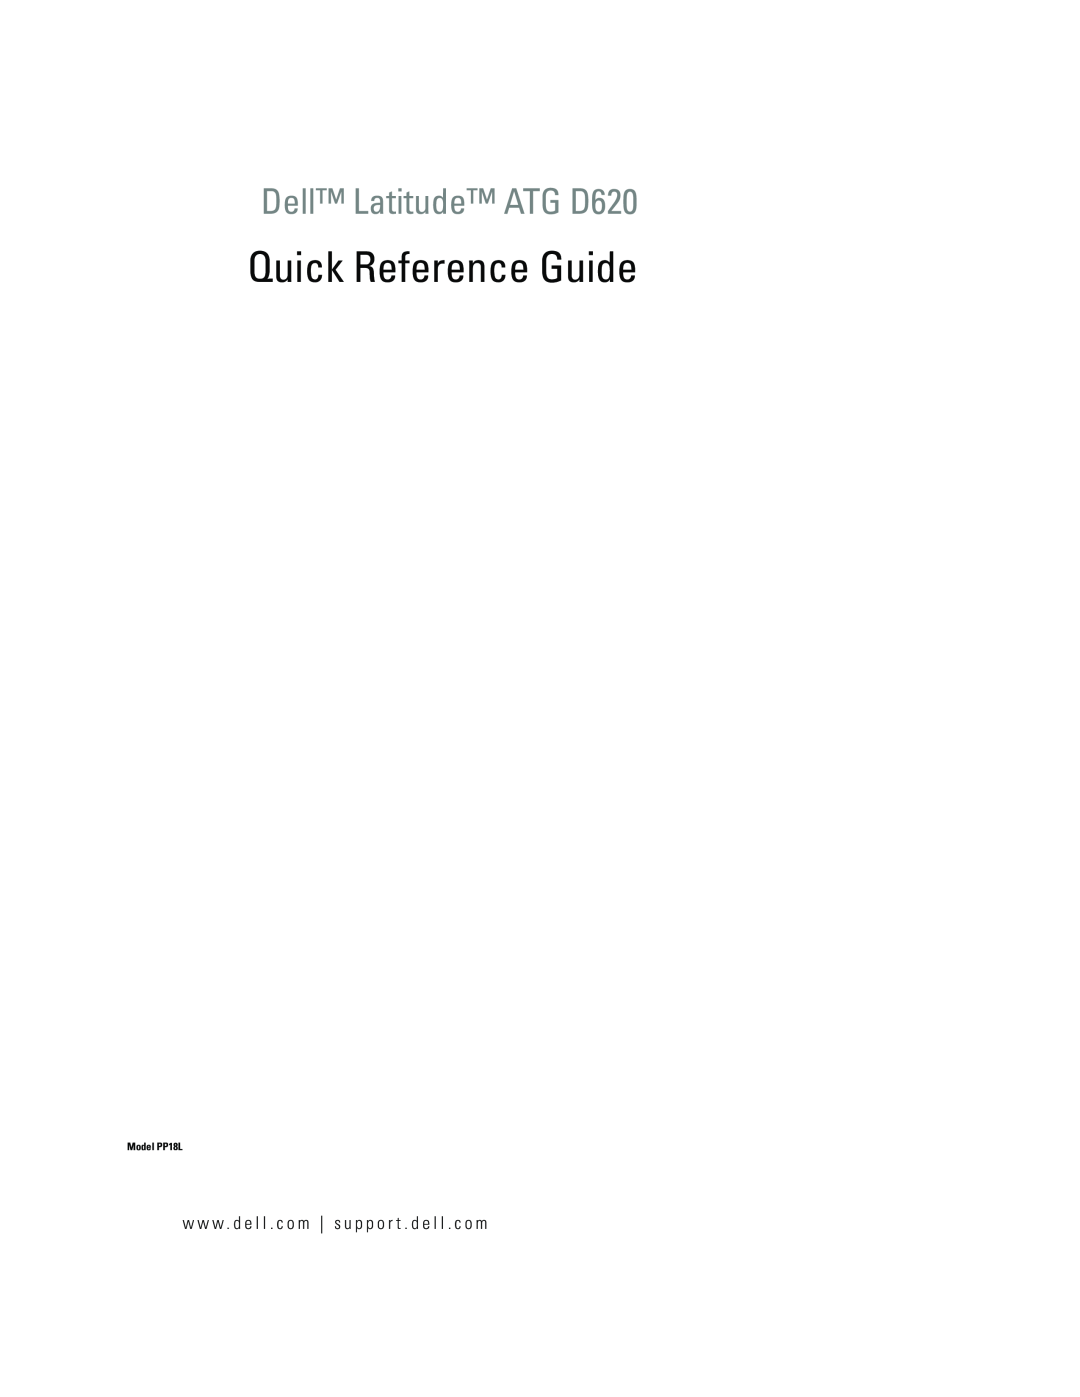 Dell manual Quick Reference Guide, Dell Latitude ATG D620, w w w . d e l l . c o m s u p p o r t . d e l l . c o m 